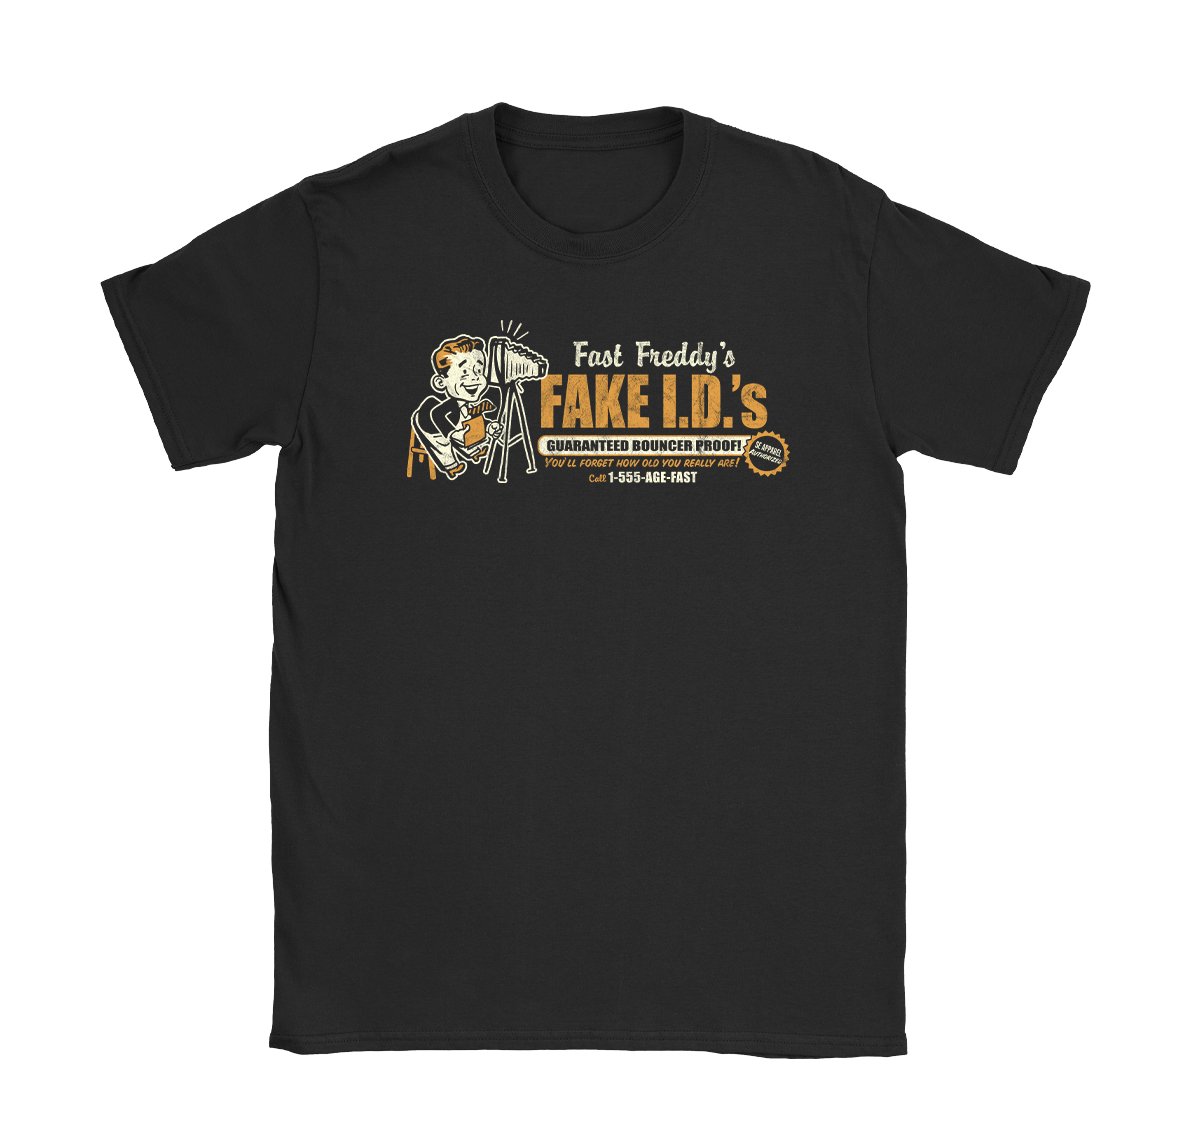 Fast Freddy's Fake I.D.'s T-Shirt - Black Cat MFG -